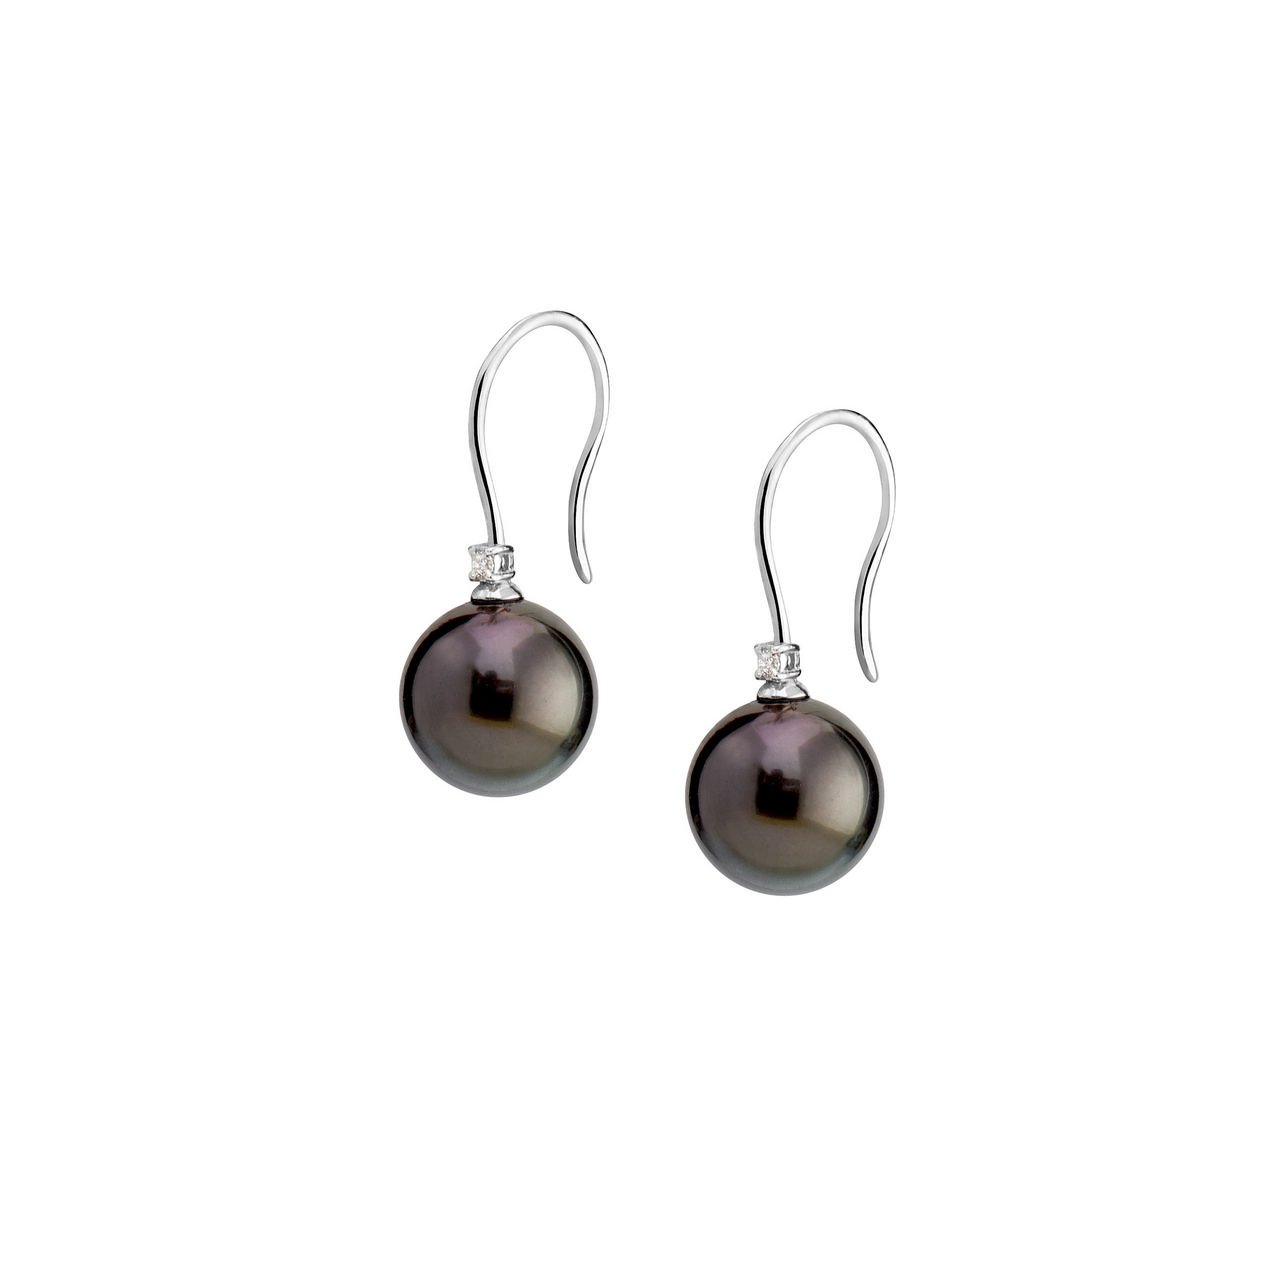 Hook earrings with Tahiti pearls and diamonds - Genisi Pearls